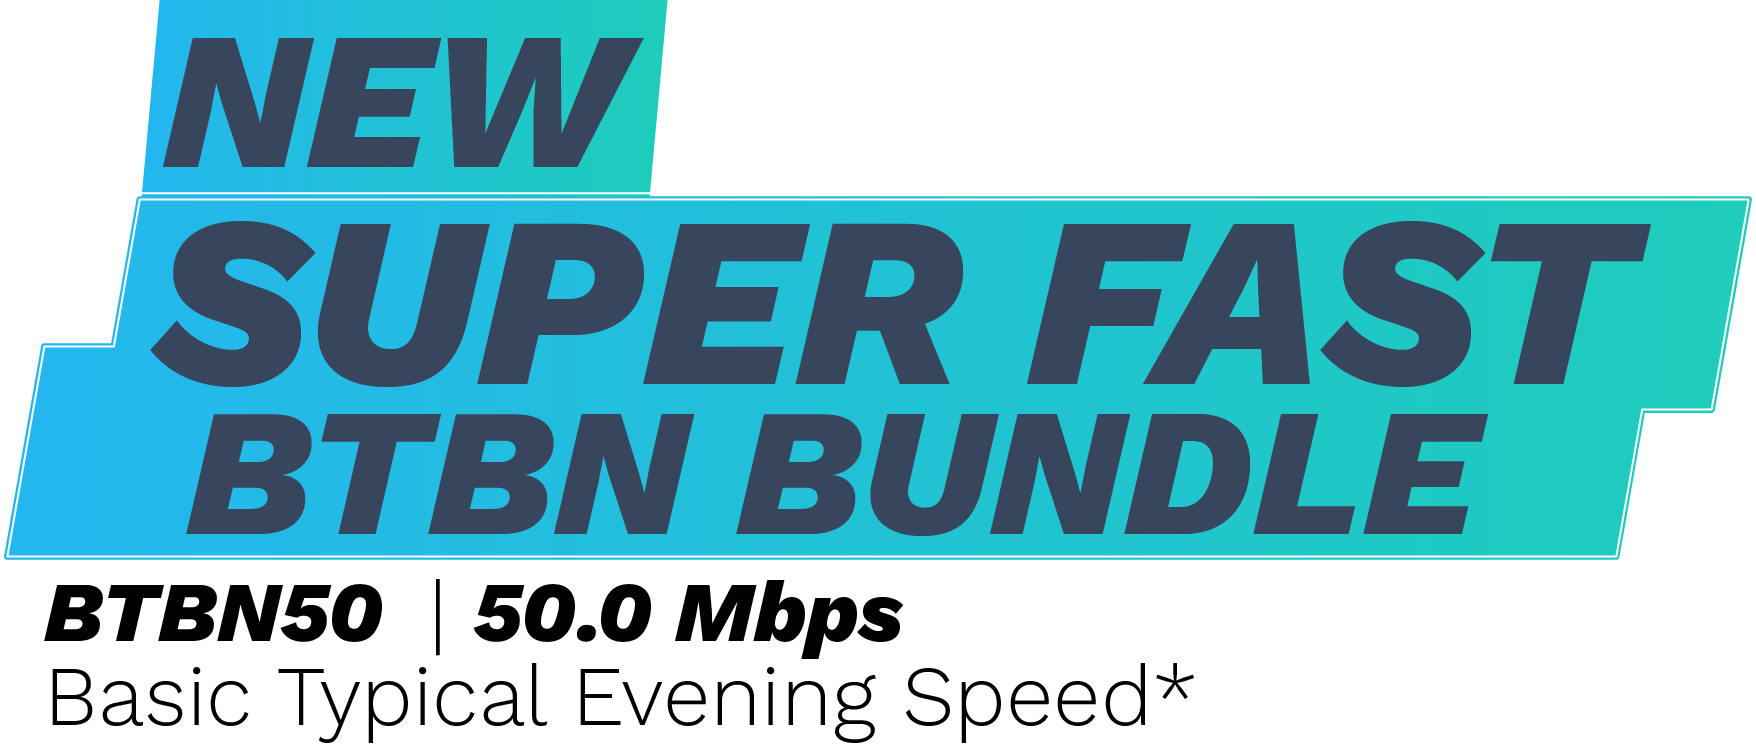 New superfast nbn bundle